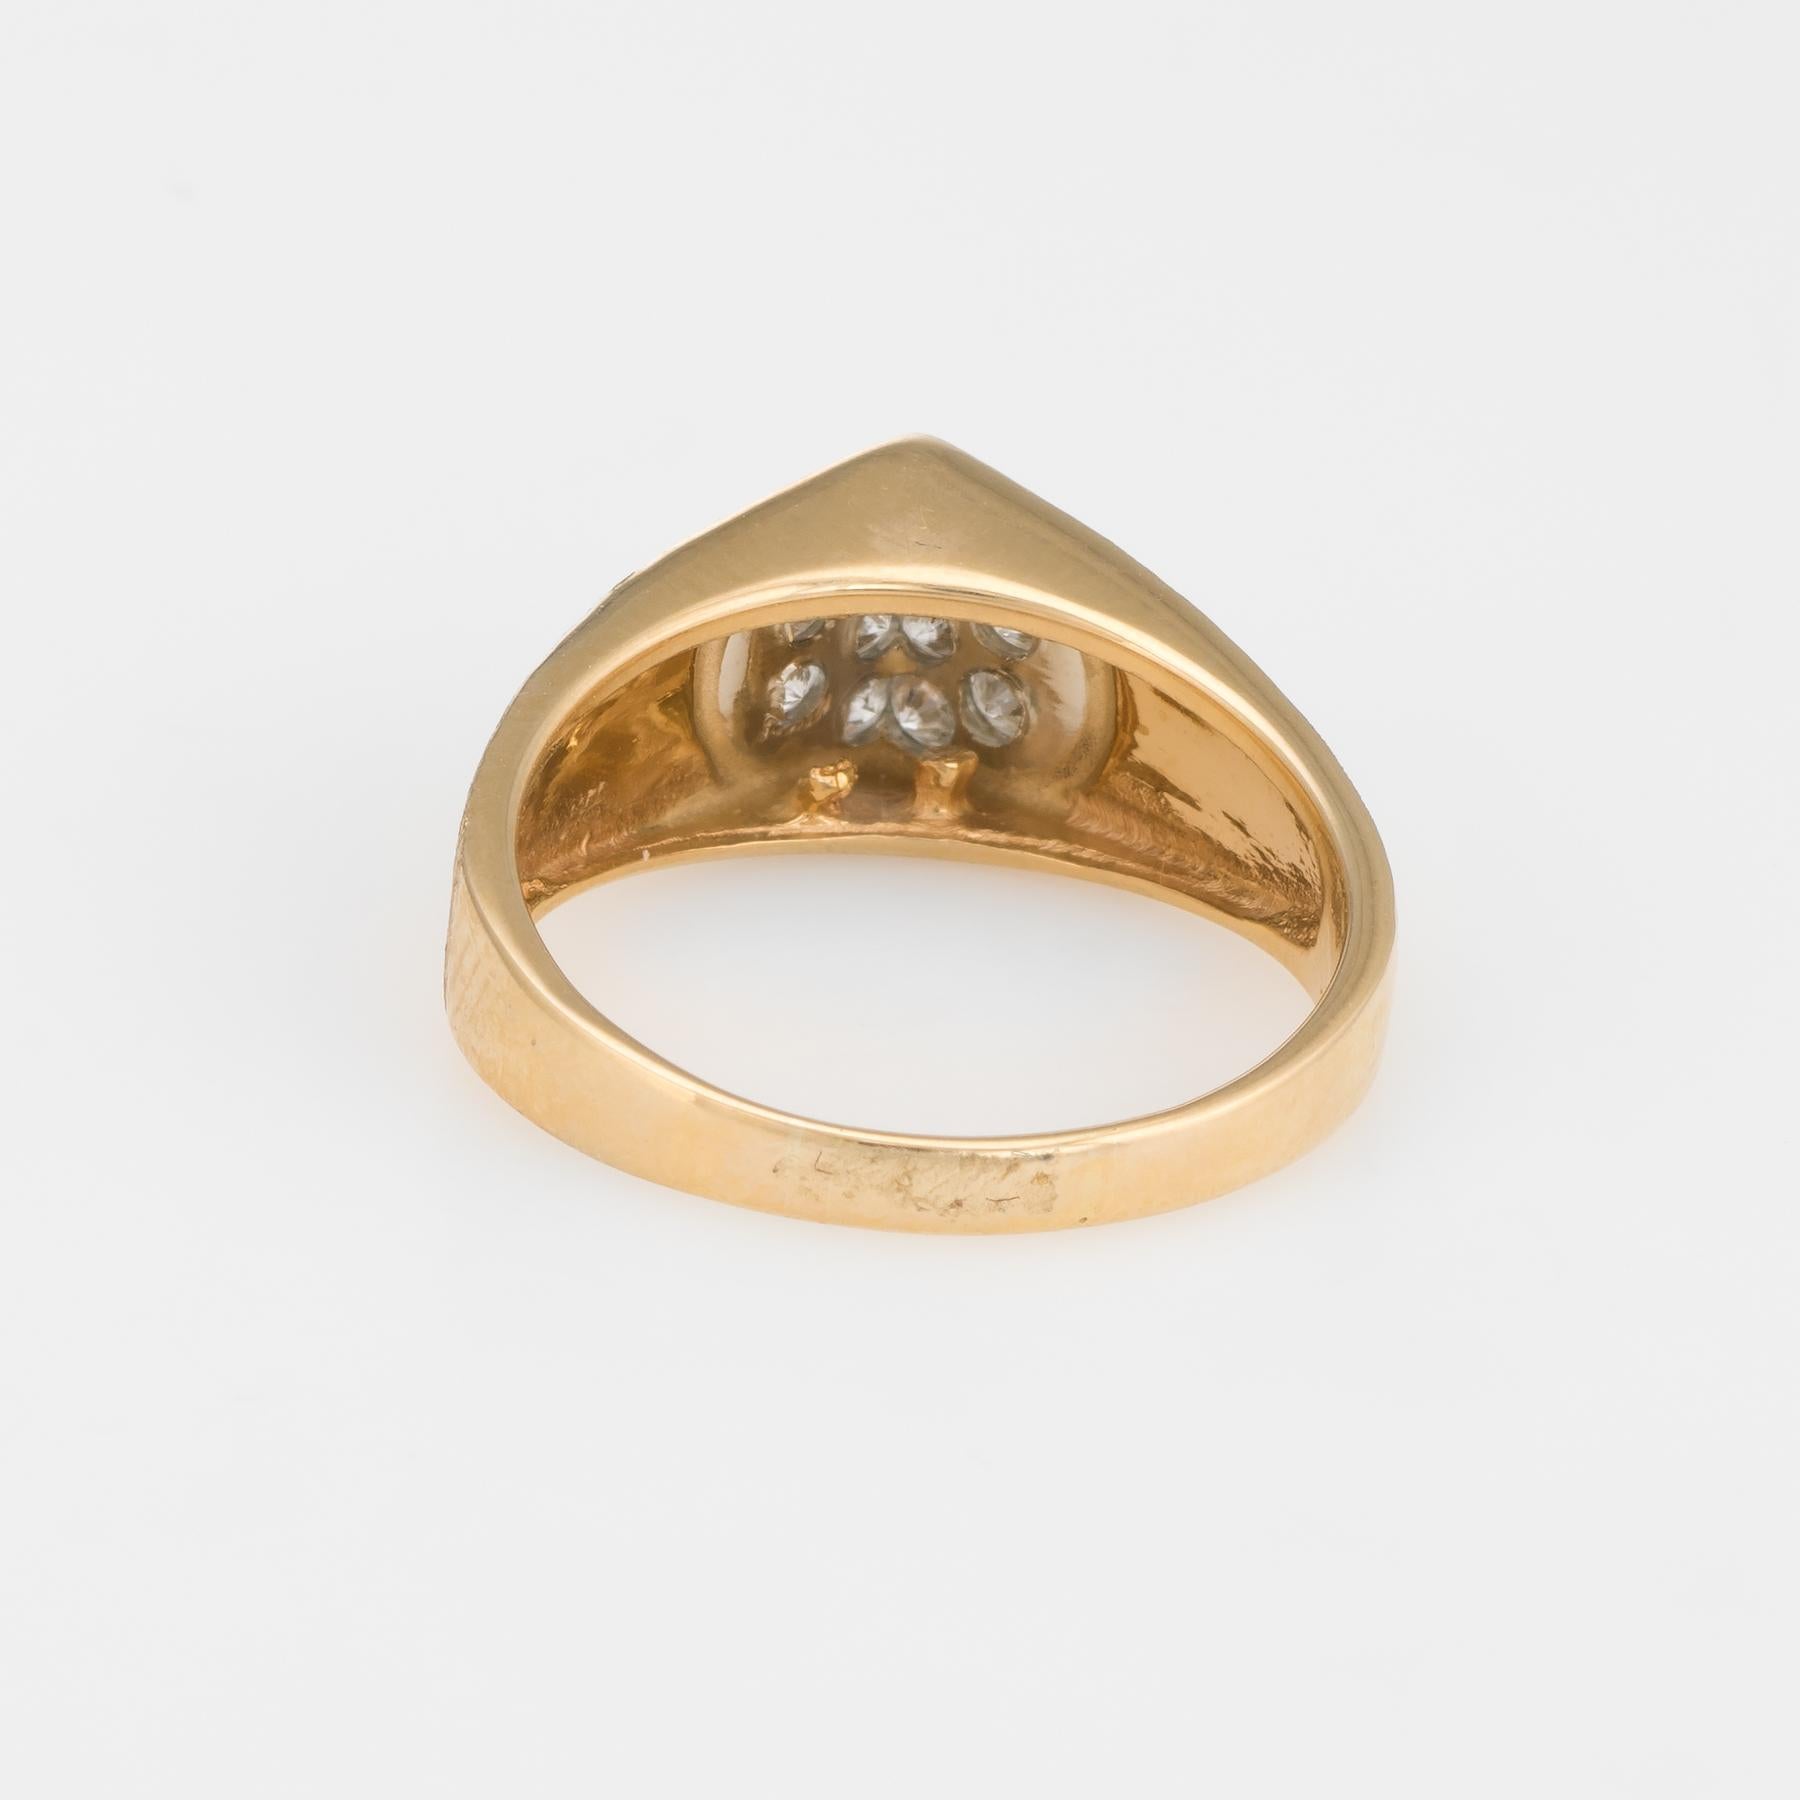 Women's Vintage Pointed Diamond Ring 14k Yellow Gold Estate Fine Jewelry Satin Finish